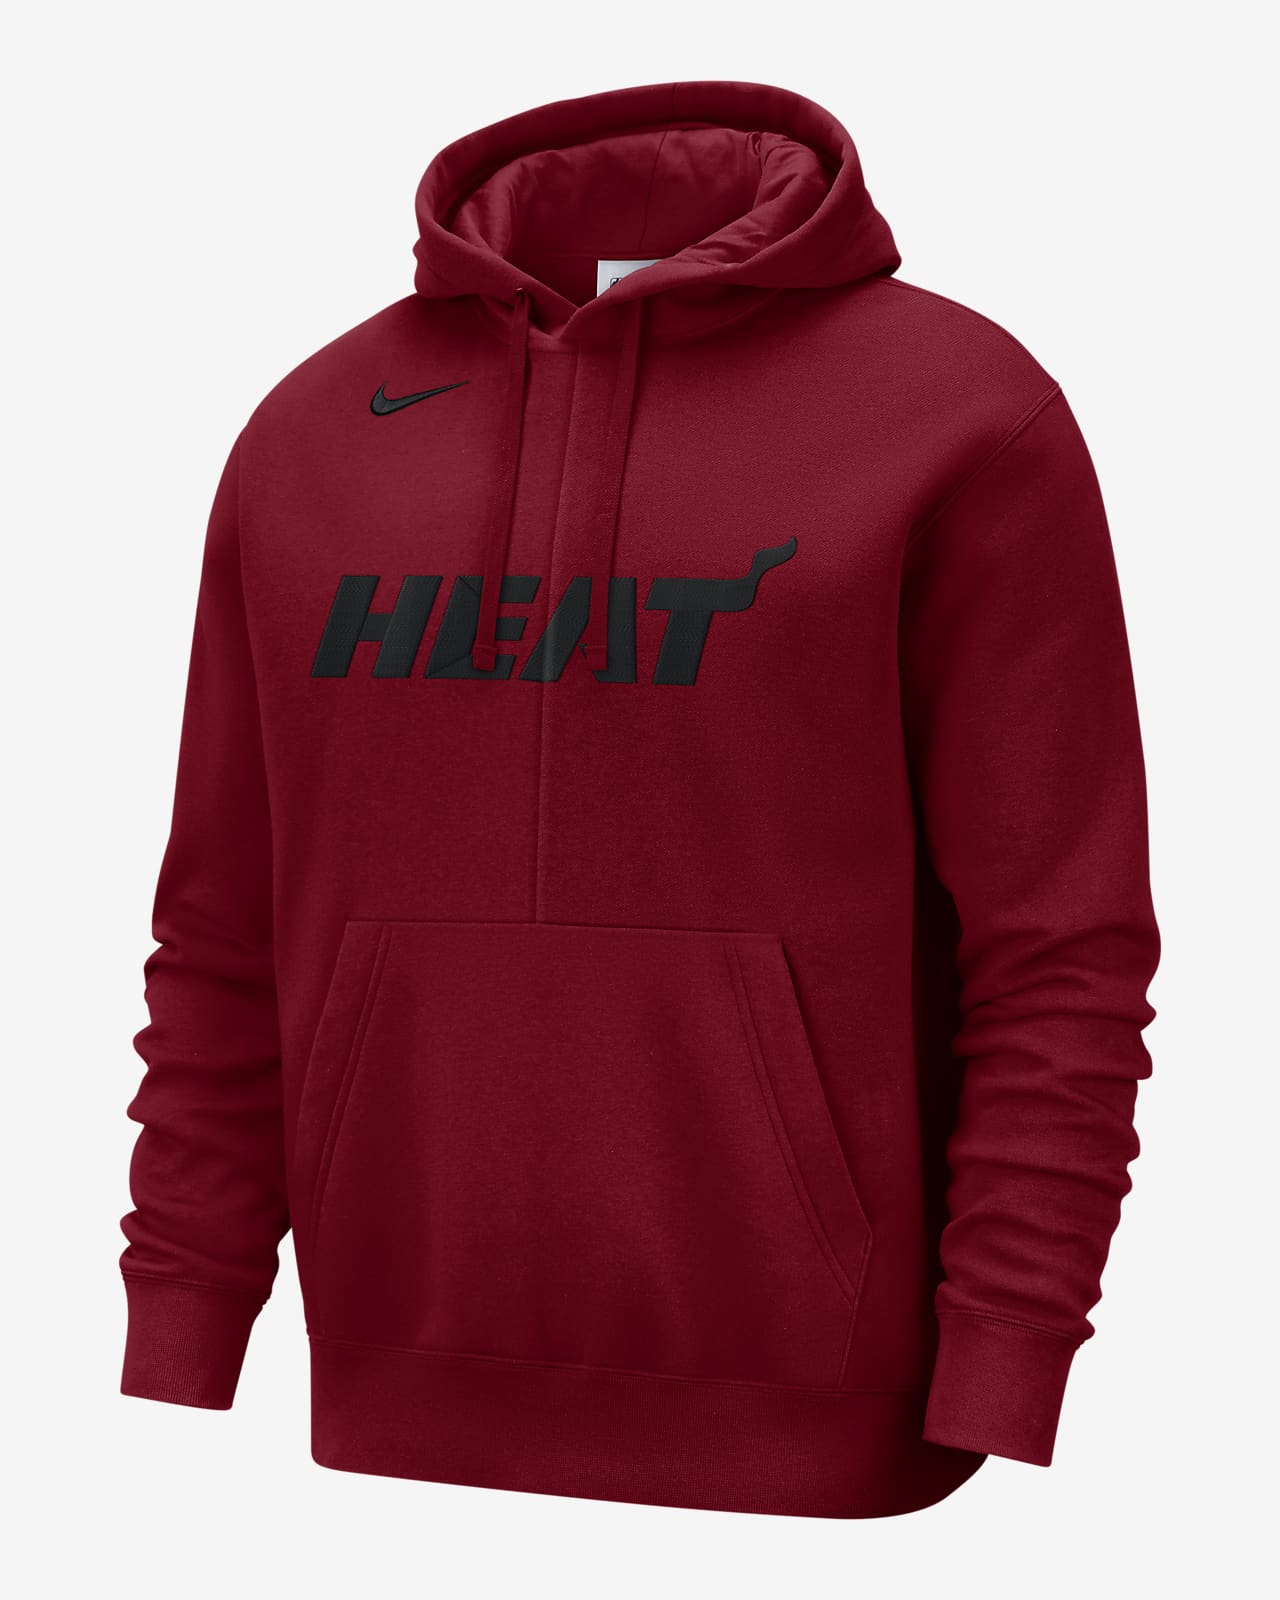 Miami Heat Mens Apparel & Gifts, Mens Heat Clothing, Merchandise